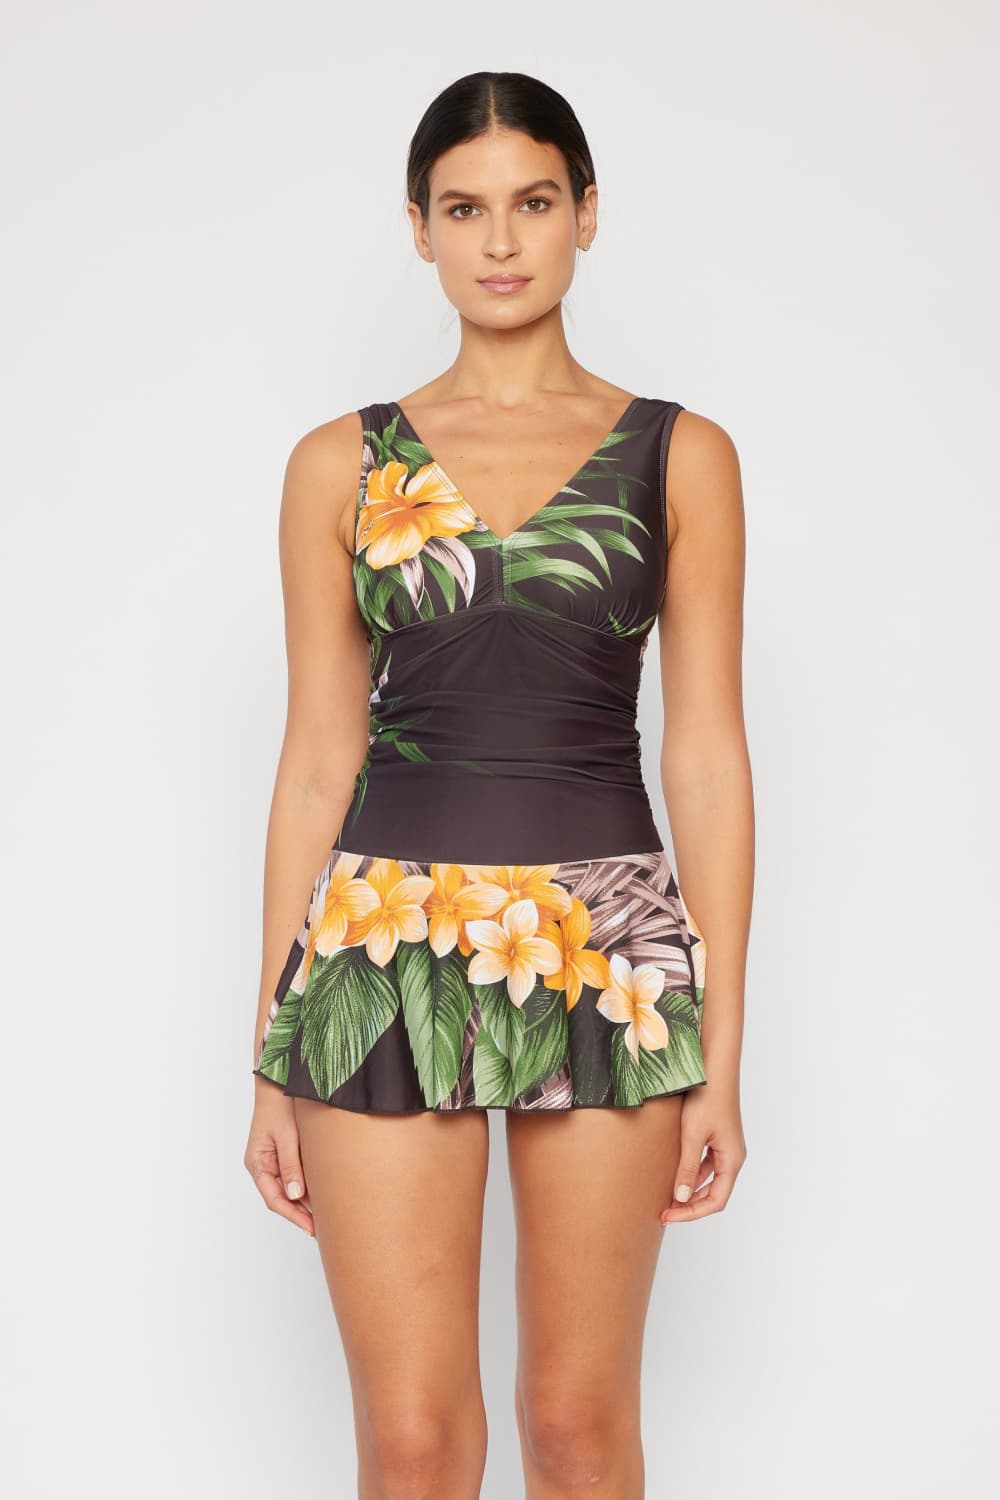 Marina West Swim Plus Size Clear Waters Swim Dress in Aloha Brown Mother Daughter Swimwear  Sunset and Swim   